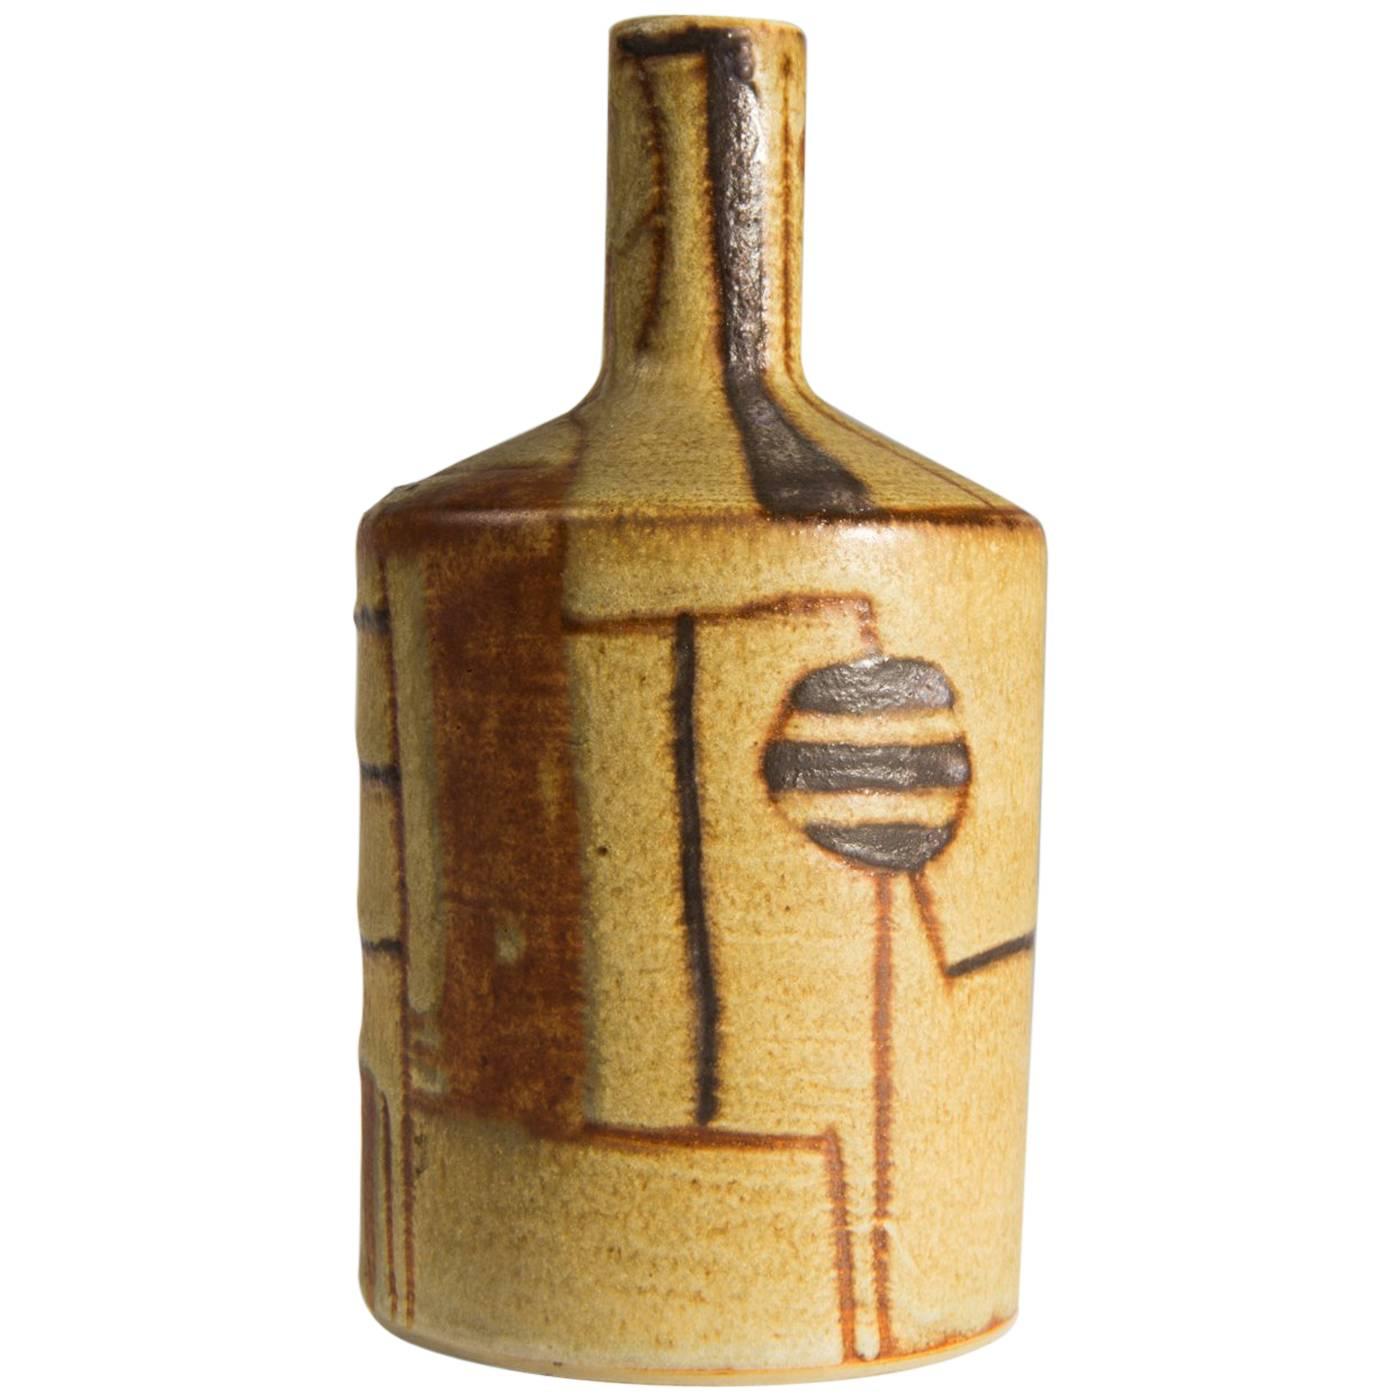 Beate Kuhn, Ceramic-Bottle Vase, Germany, 1950